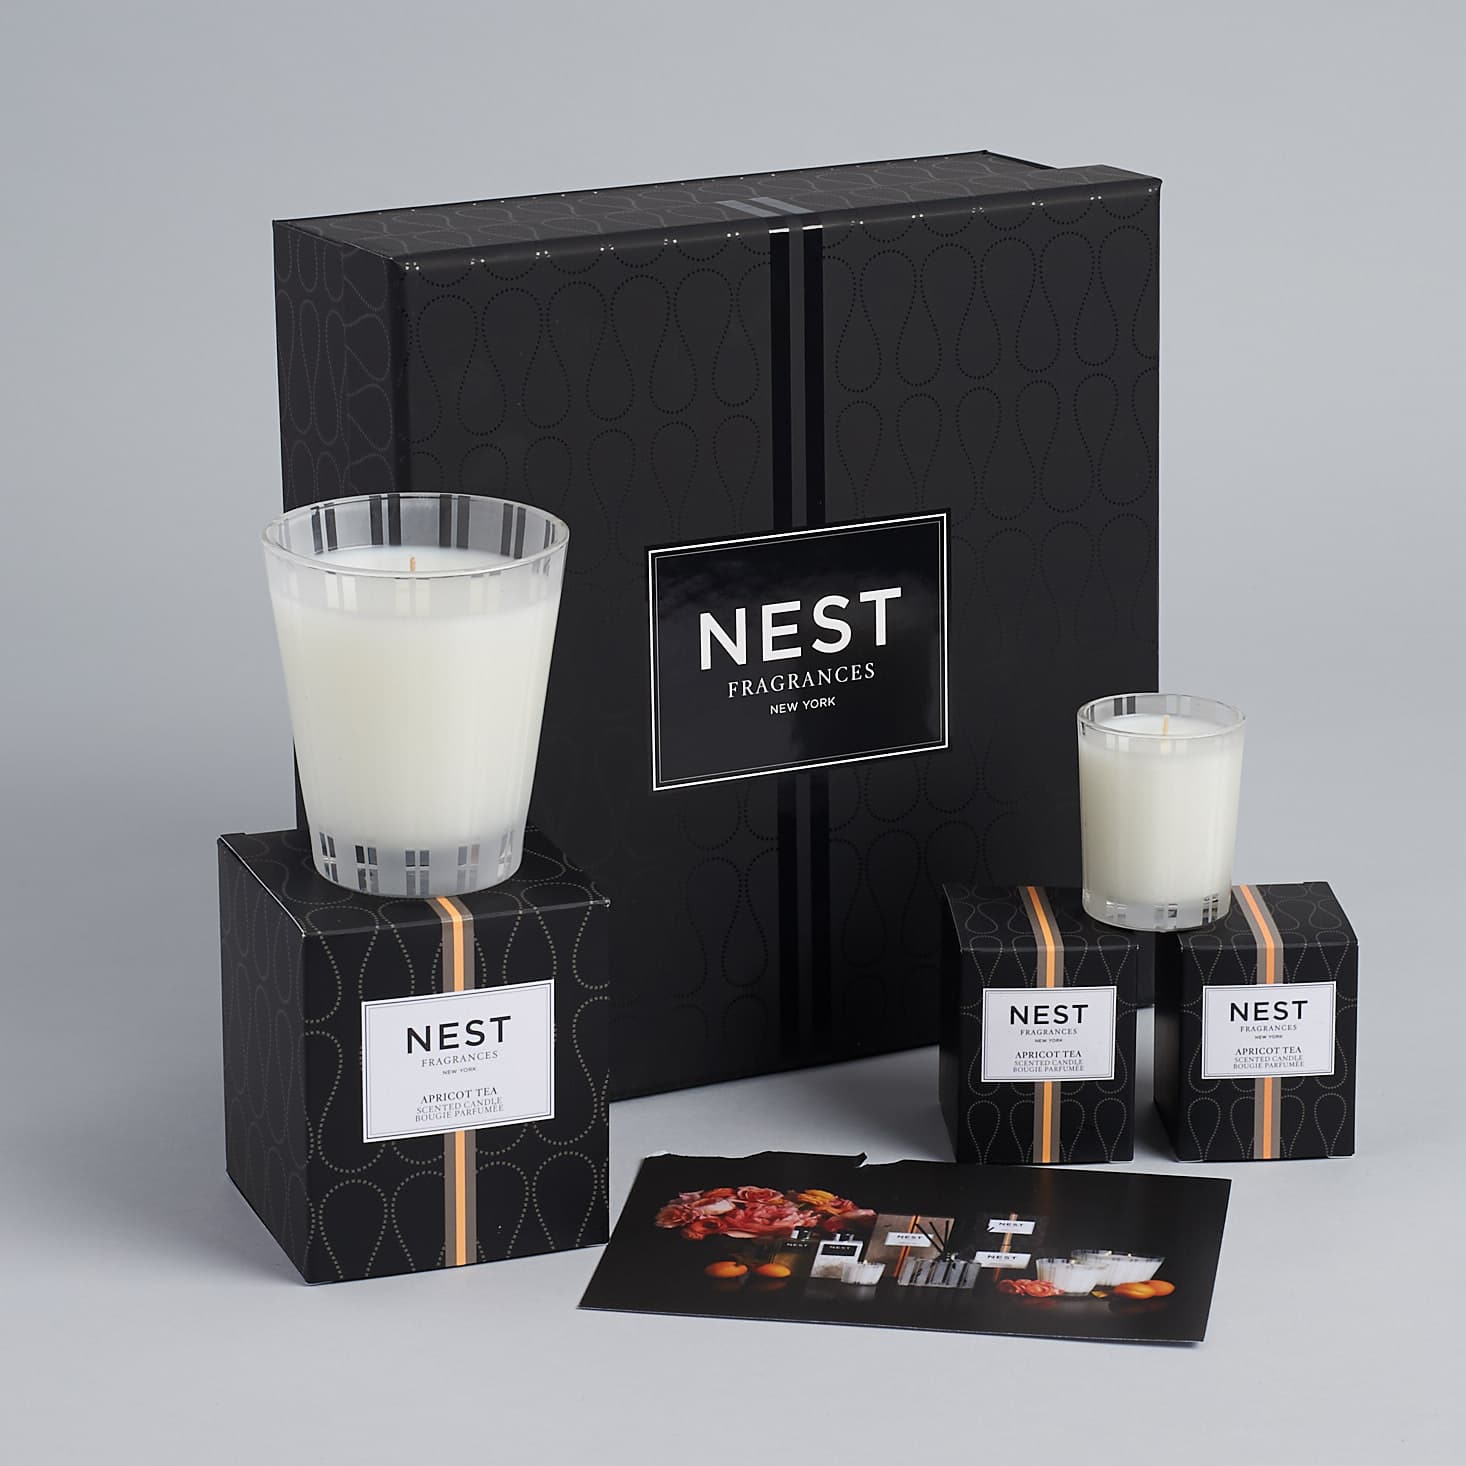 Next by Nest Fragrances Subscription Box Review – August 2017